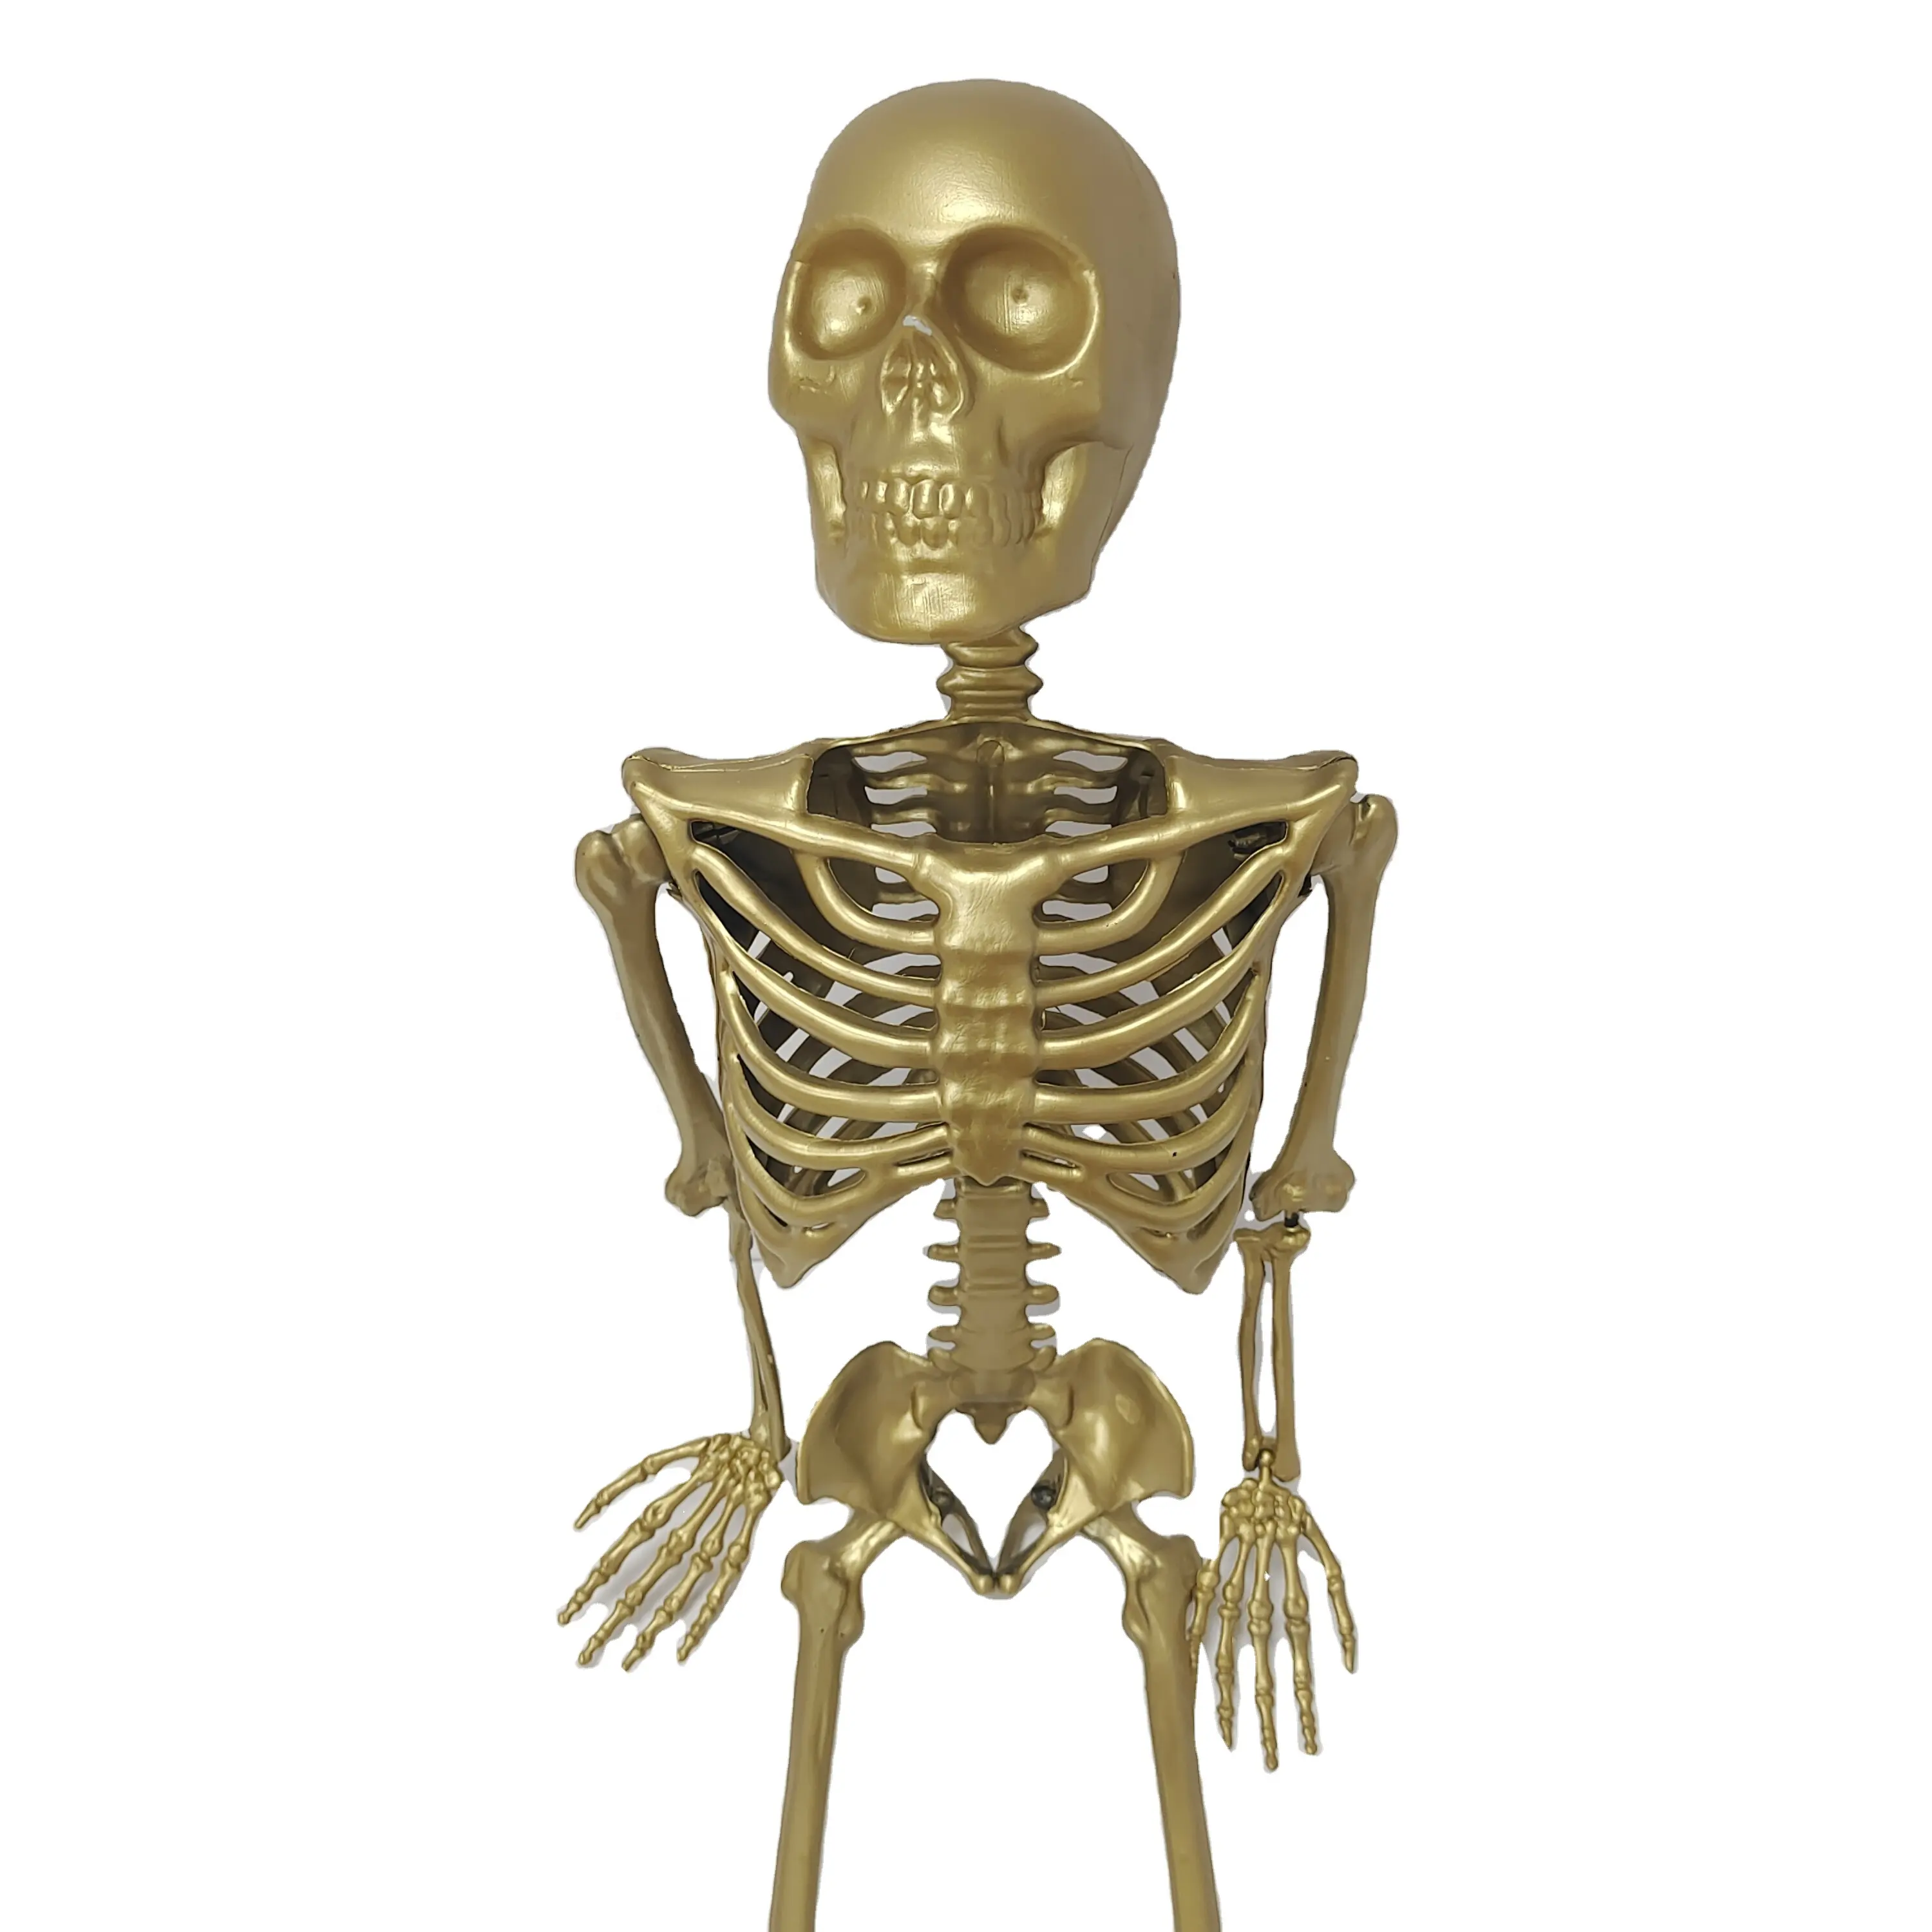 Modelos de Ciencia de plástico baratos, esqueleto humano de 91,5 cm de altura para enseñar manualidades decorativas de Halloween